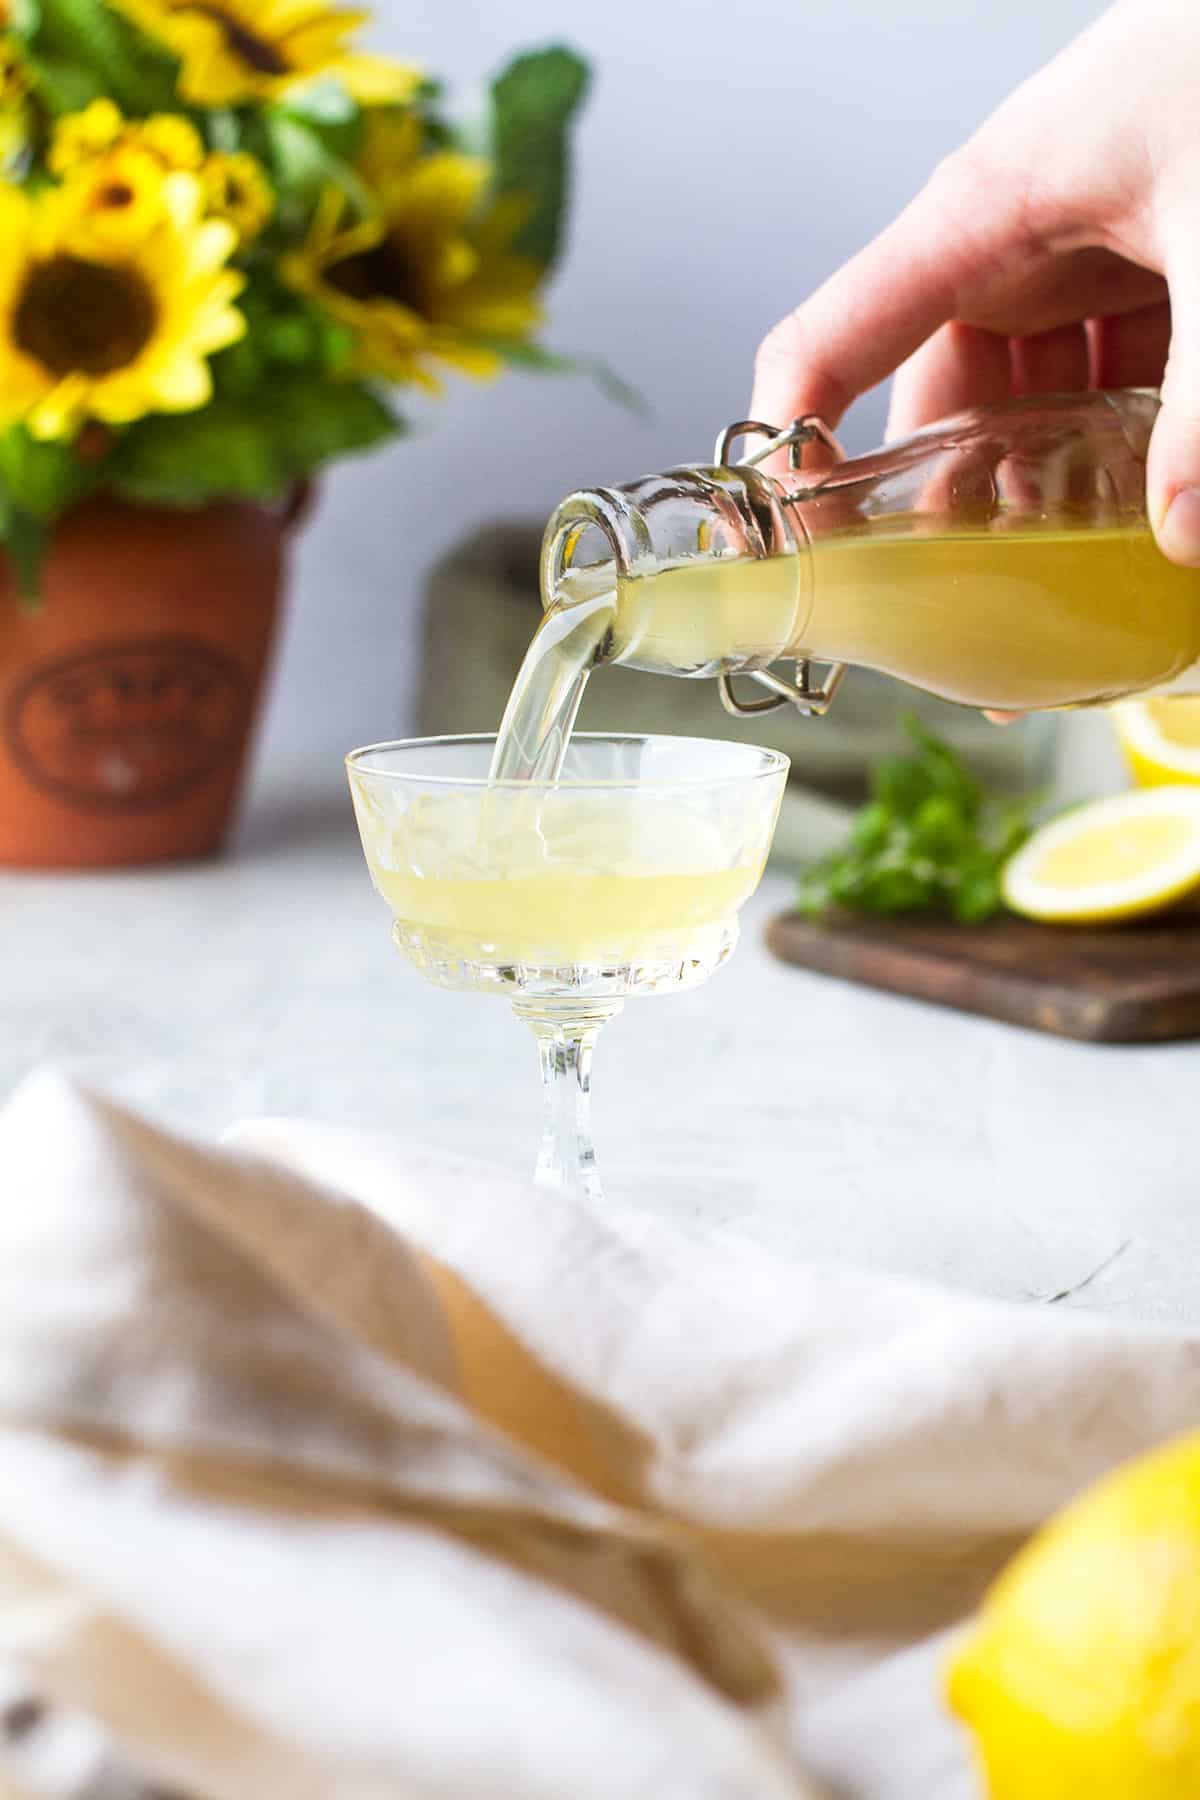 Pouring limoncello into a small, vintage glass.